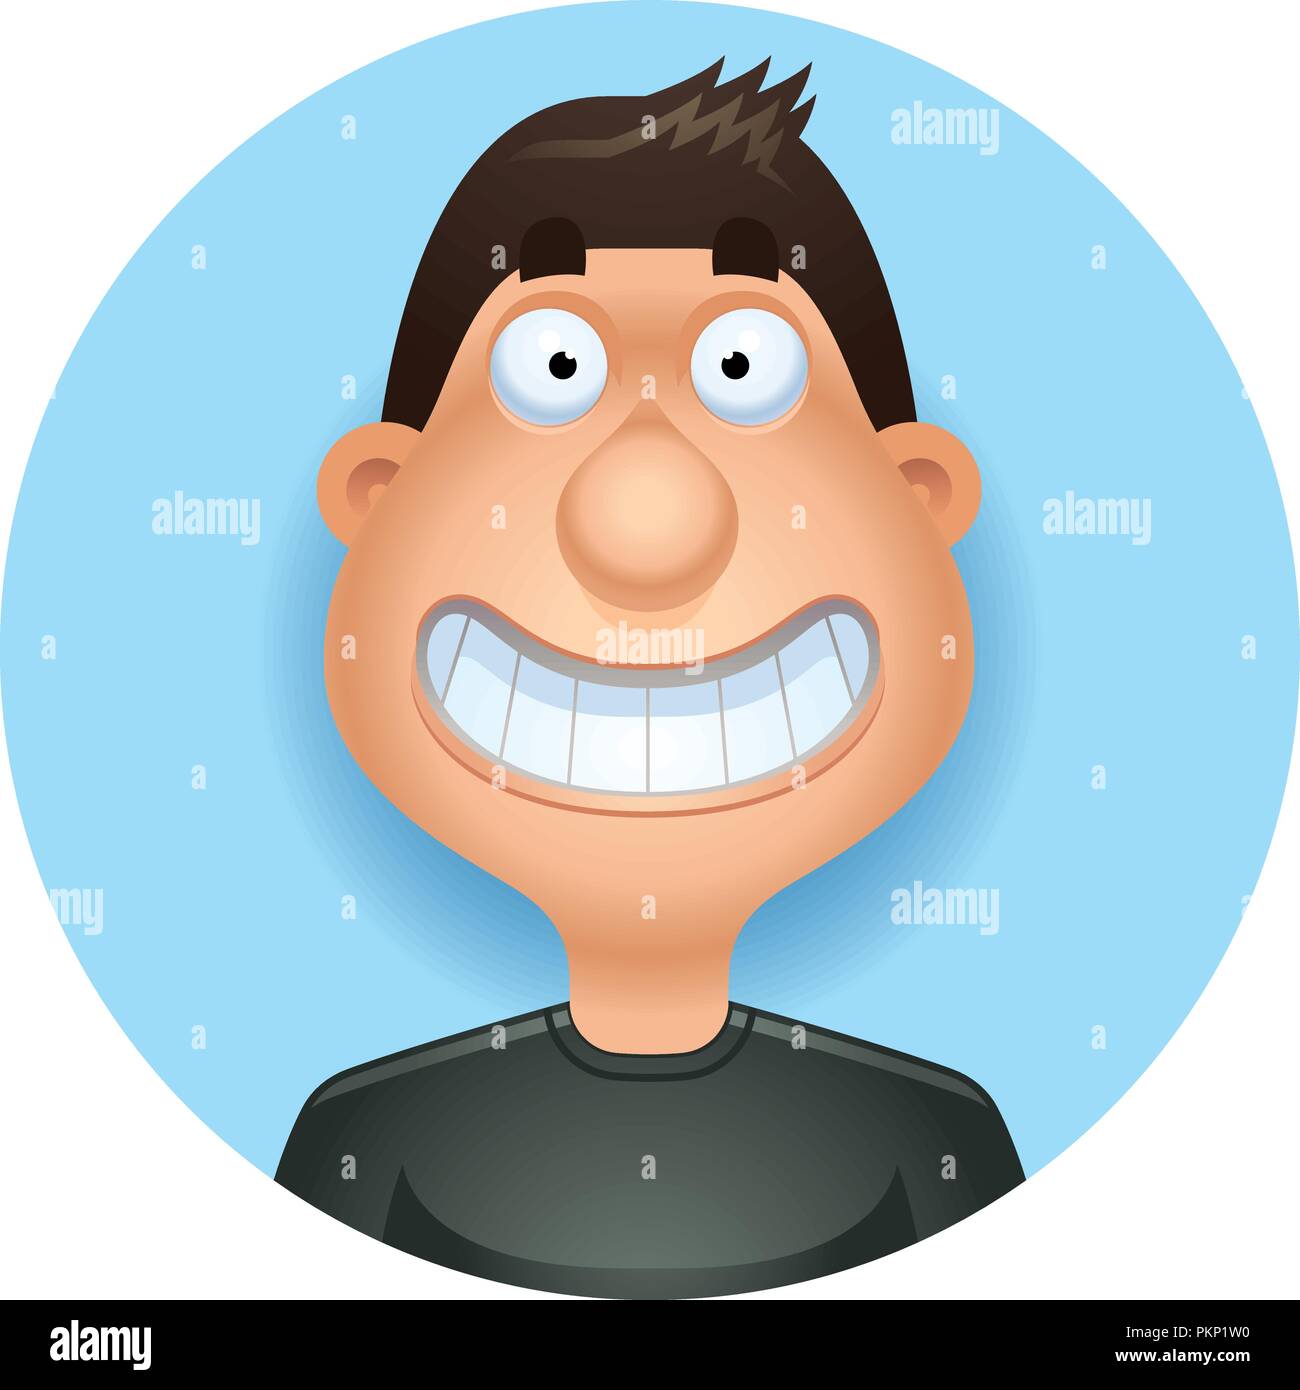 A cartoon illustration of a Hispanic man smiling  looking happy. Stock Vector